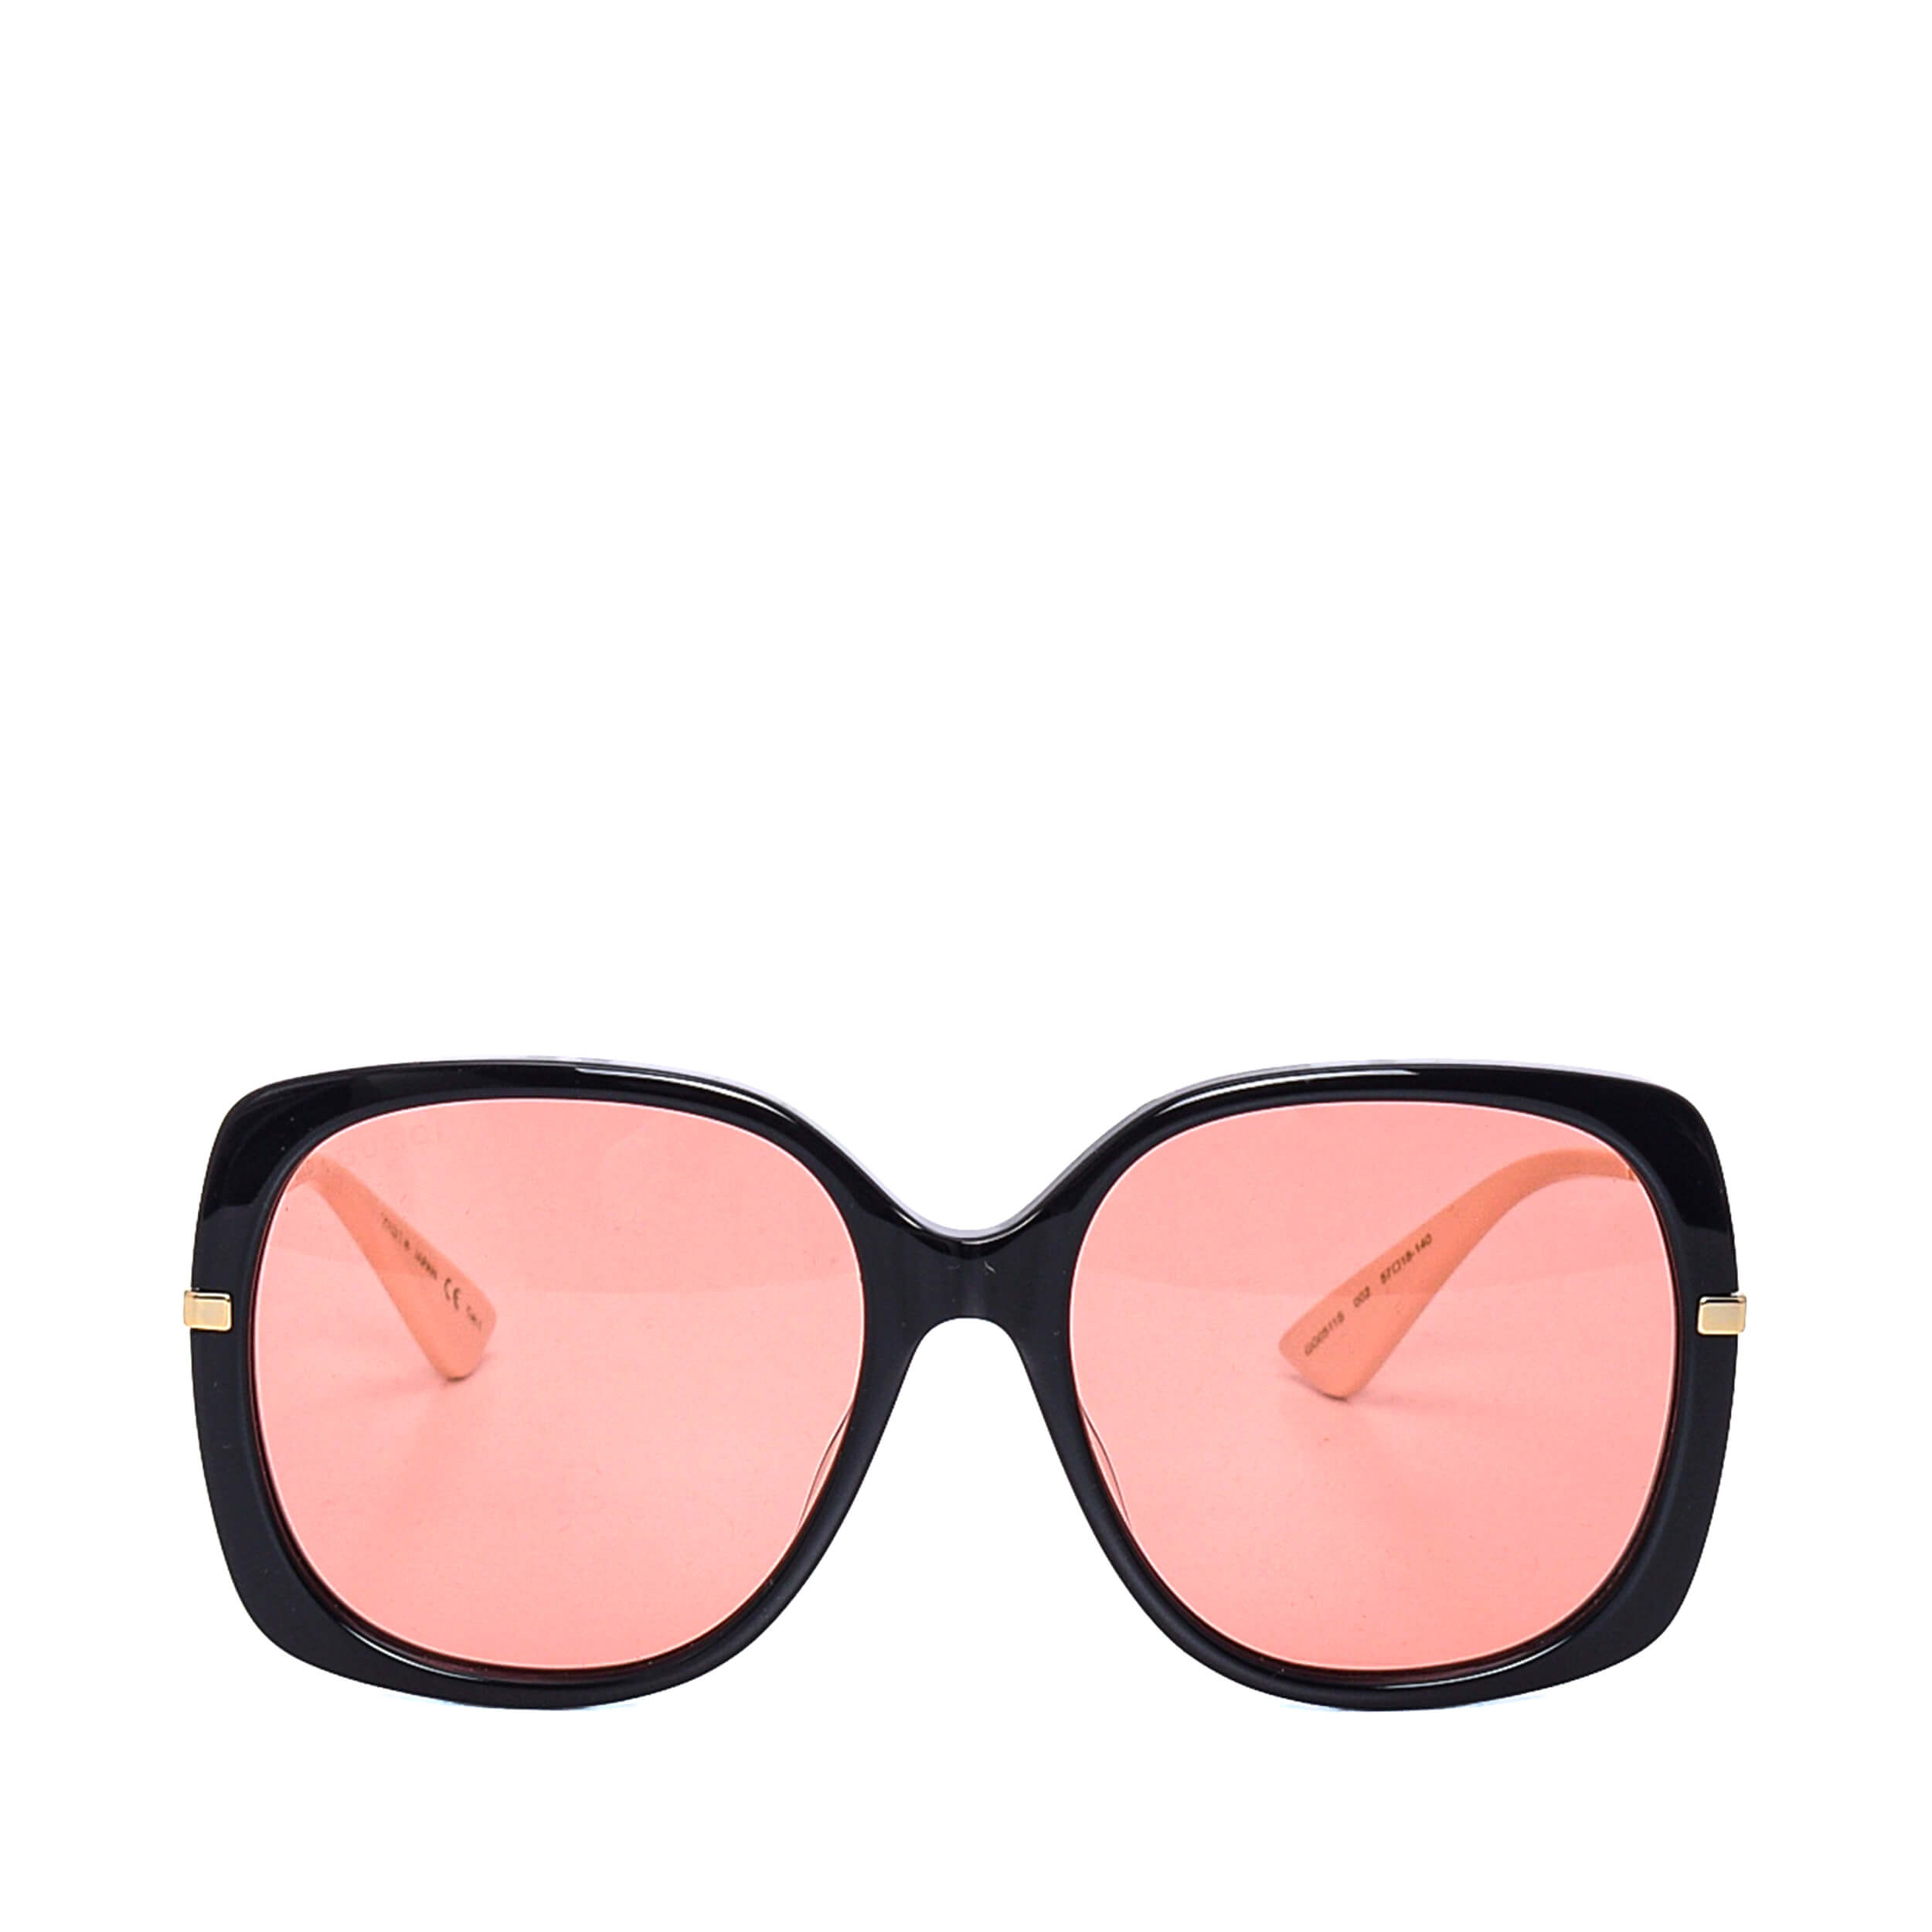 Gucci - Black&Orange Acetate Sunglasses